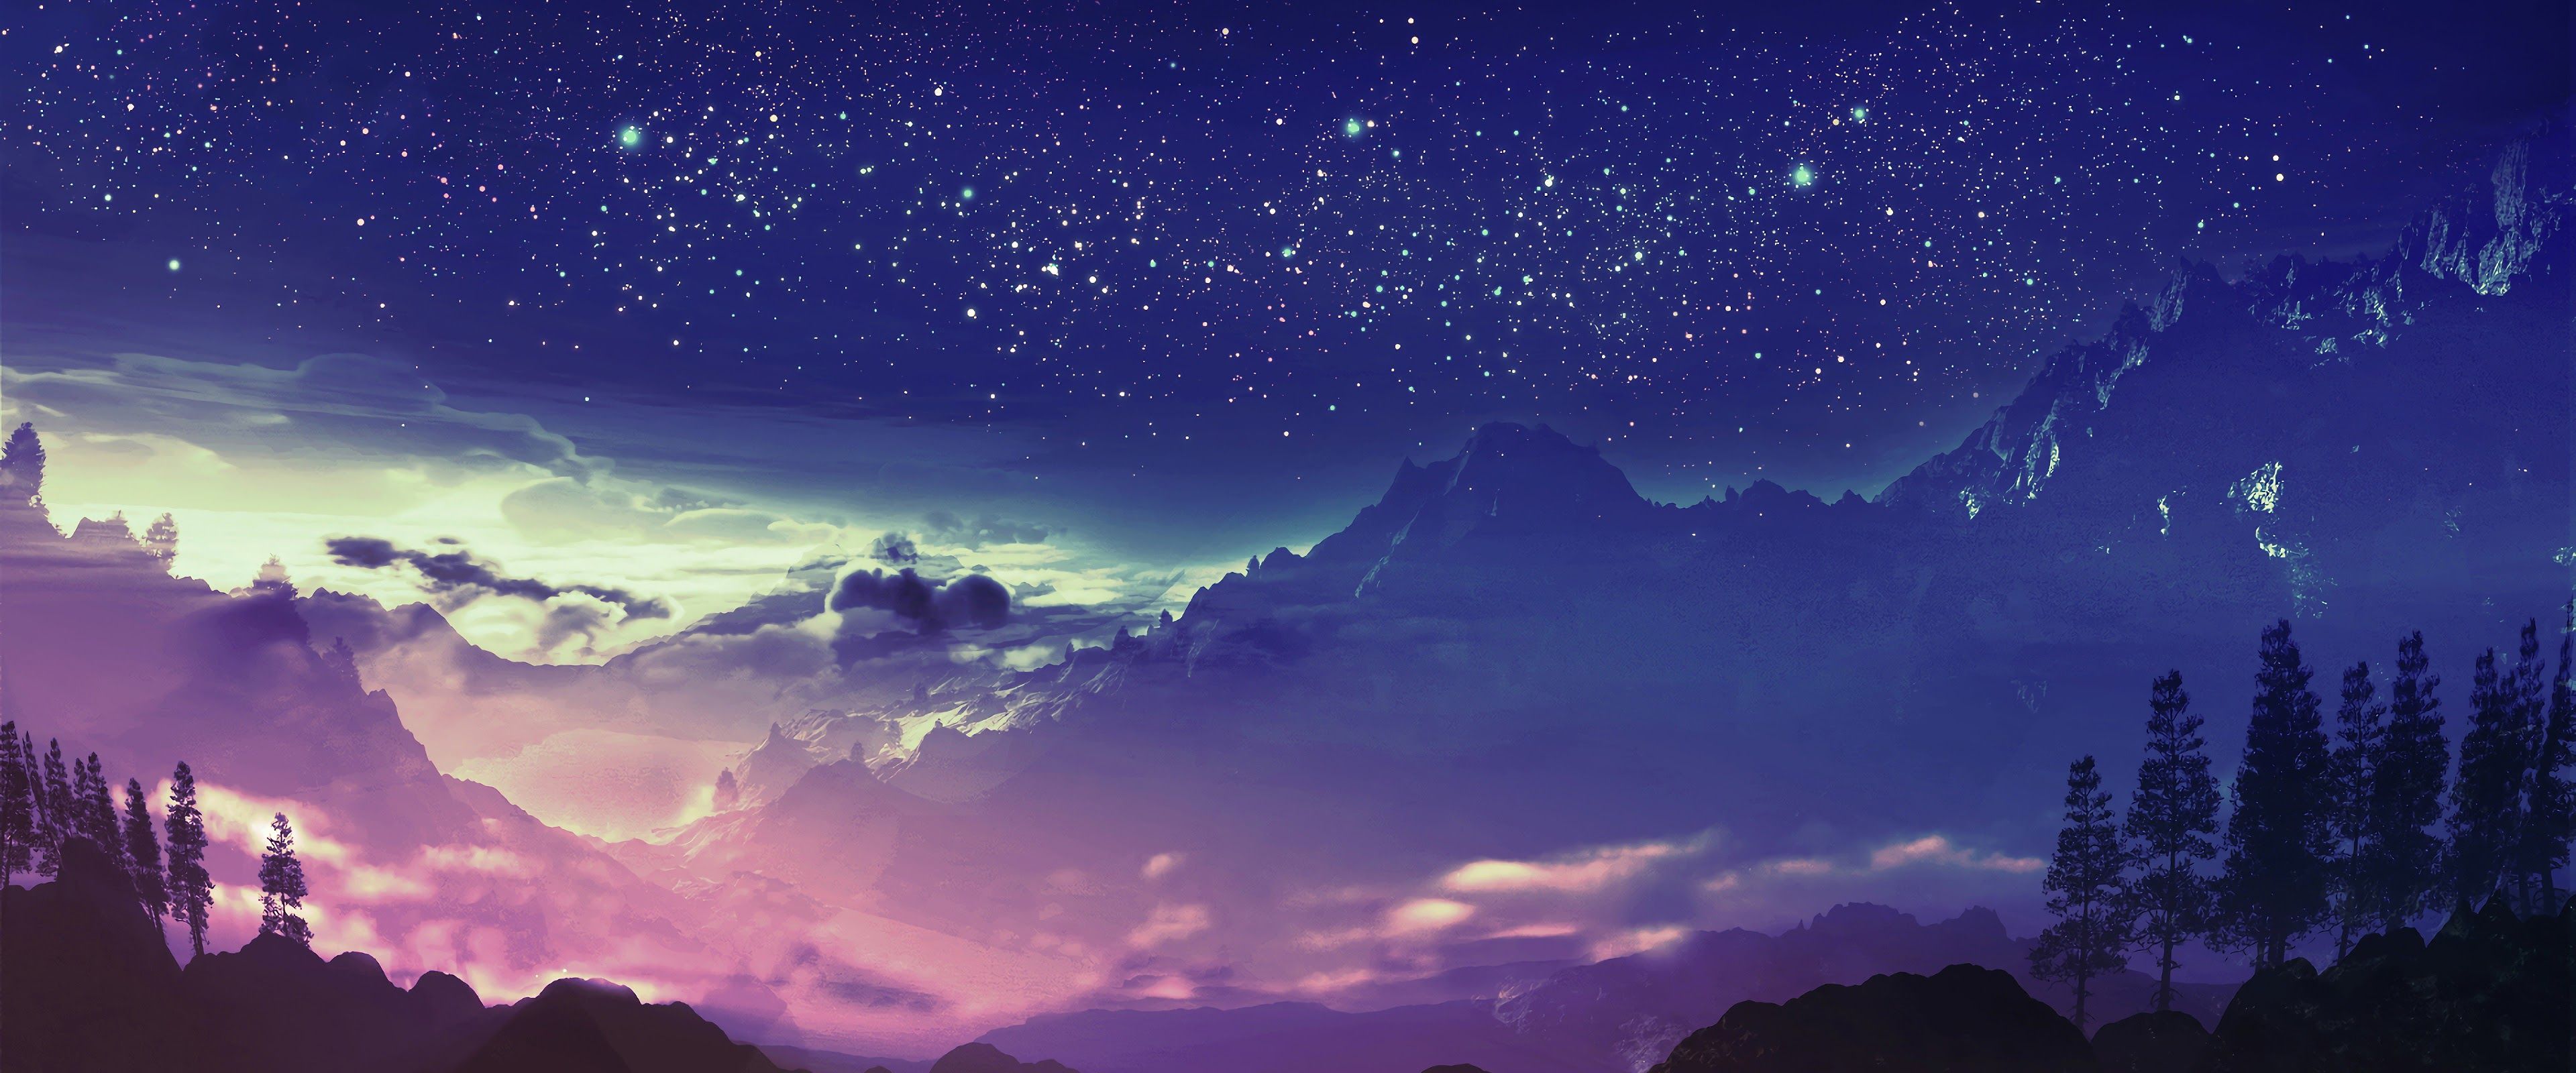 Anime Sky Background Images - Free Download on Freepik